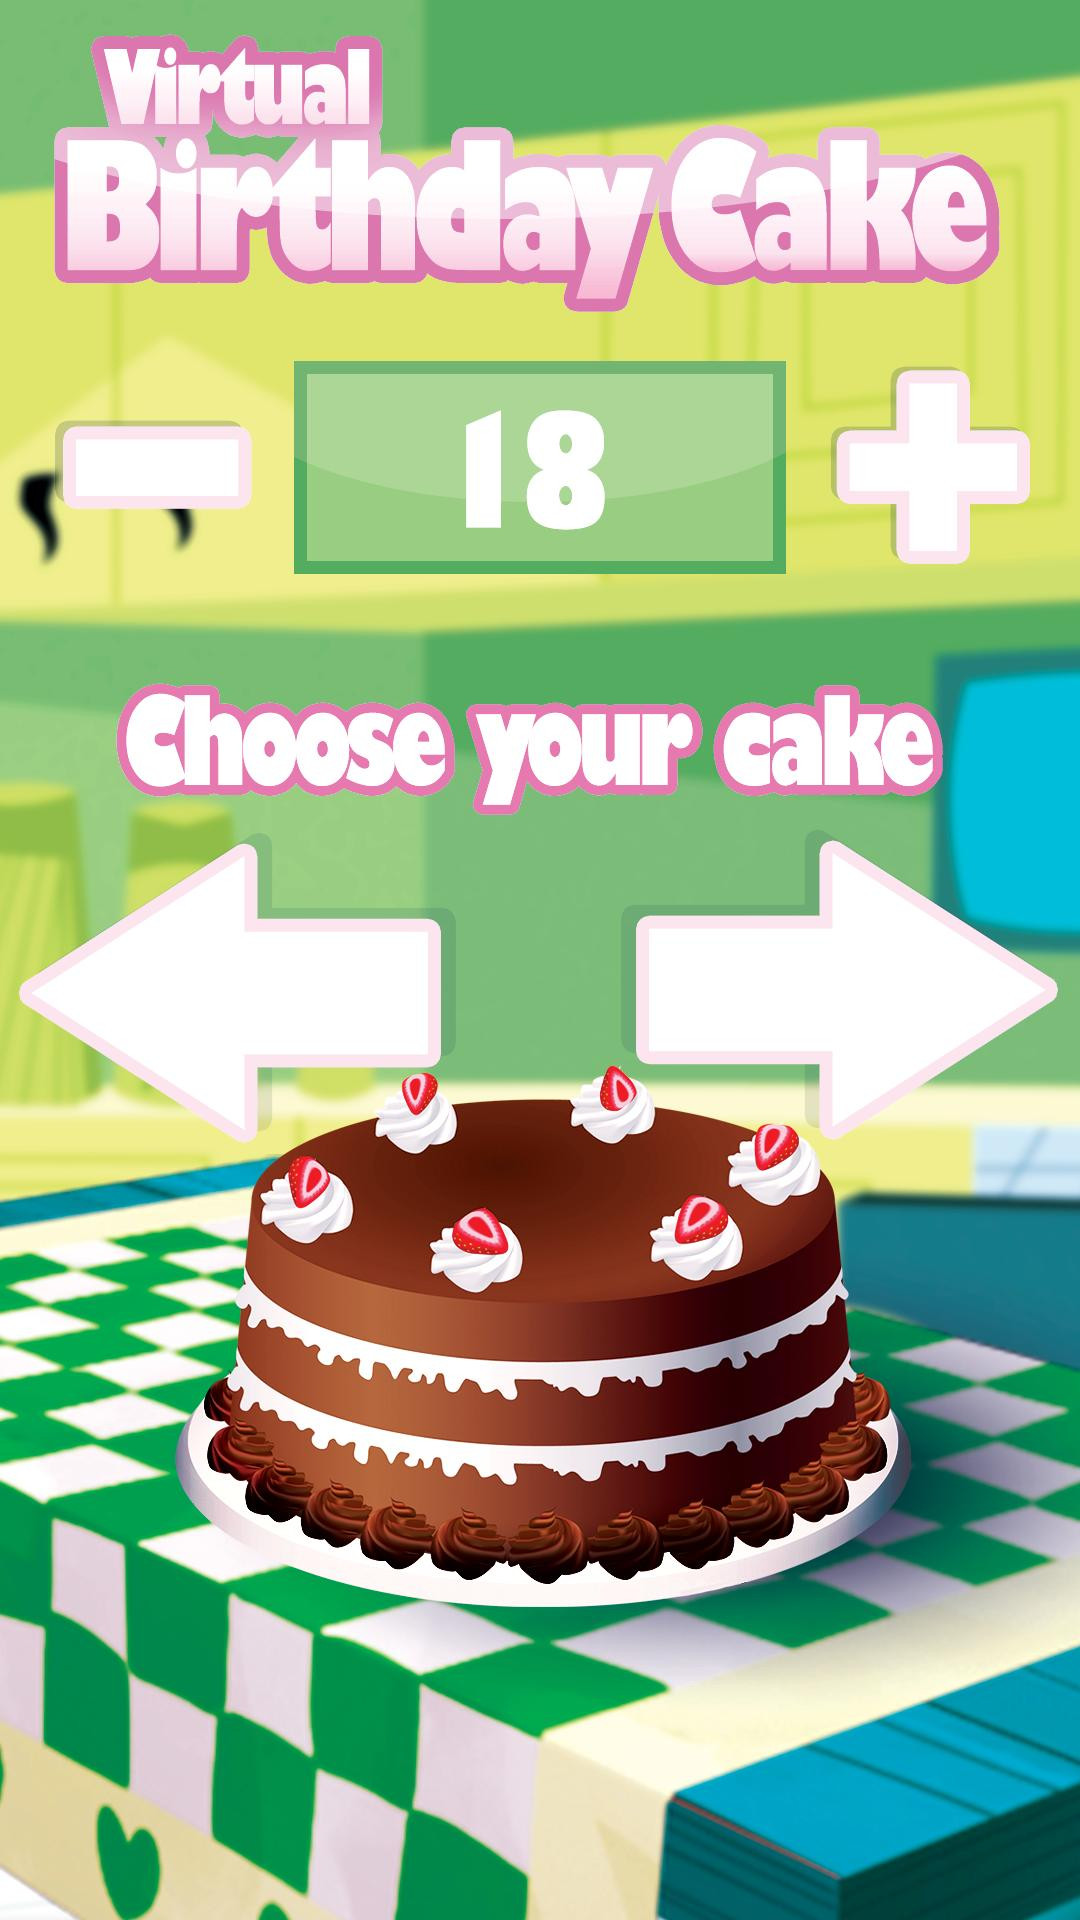 Virtual Birthday Cake
 Virtual birthday cake for Android APK Download